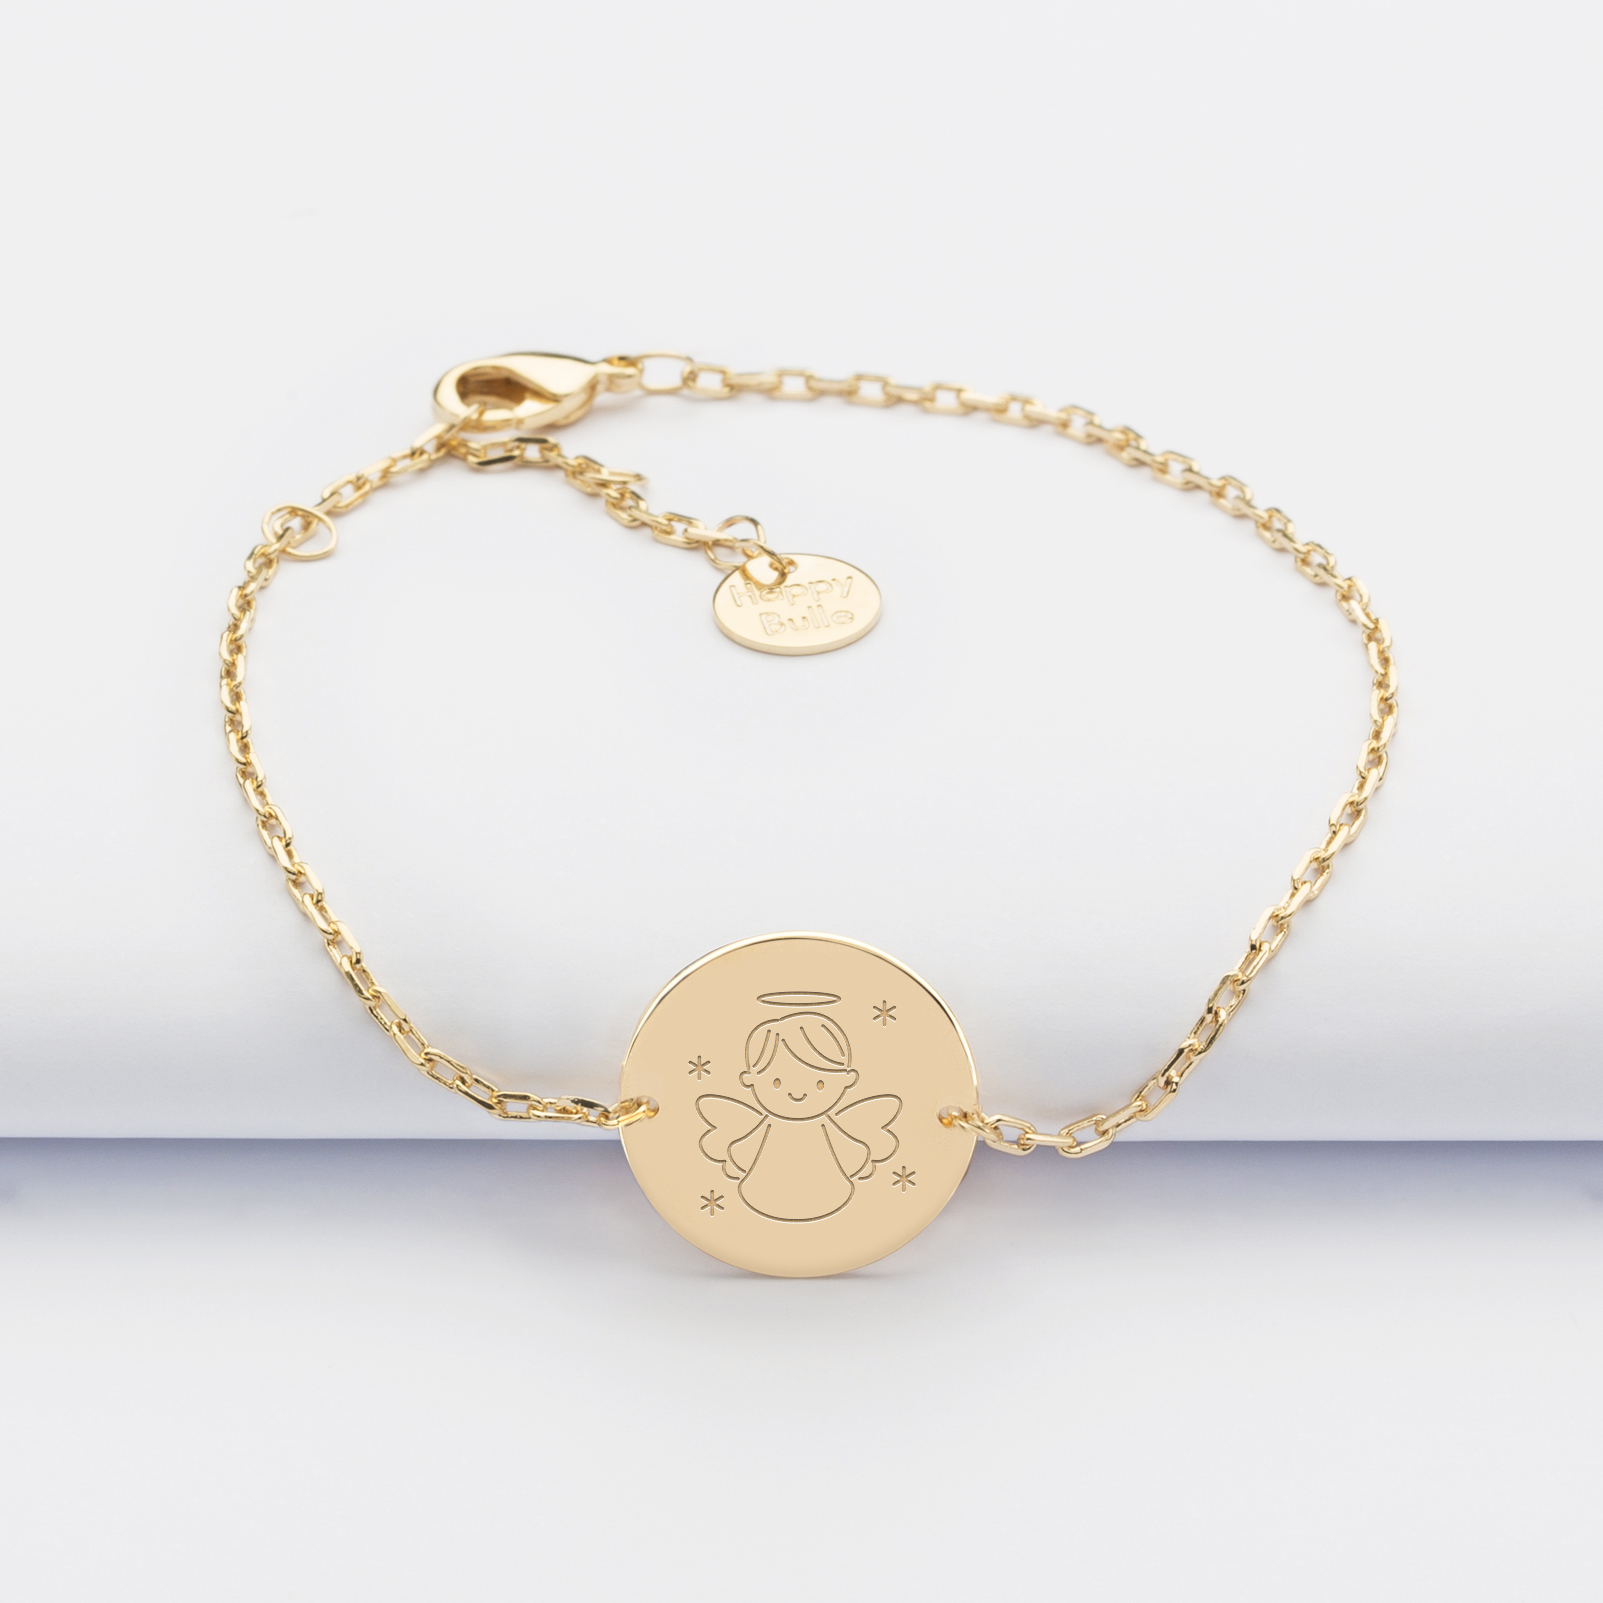 Personalised engraved gold plated medallion 2-hole children's baptism chain bracelet 15mm